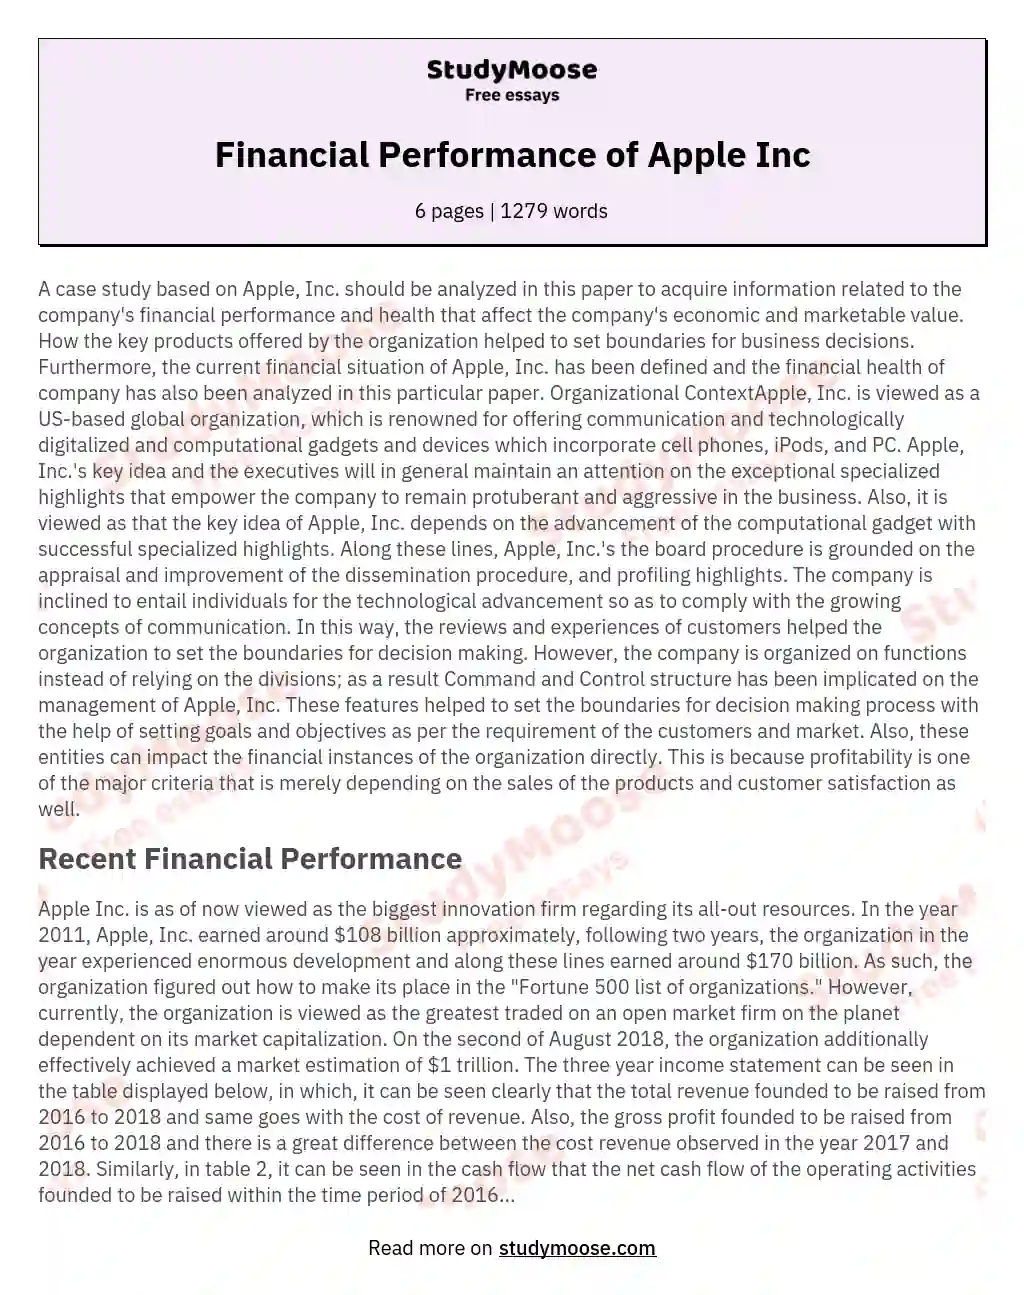 Financial Performance of Apple Inc essay